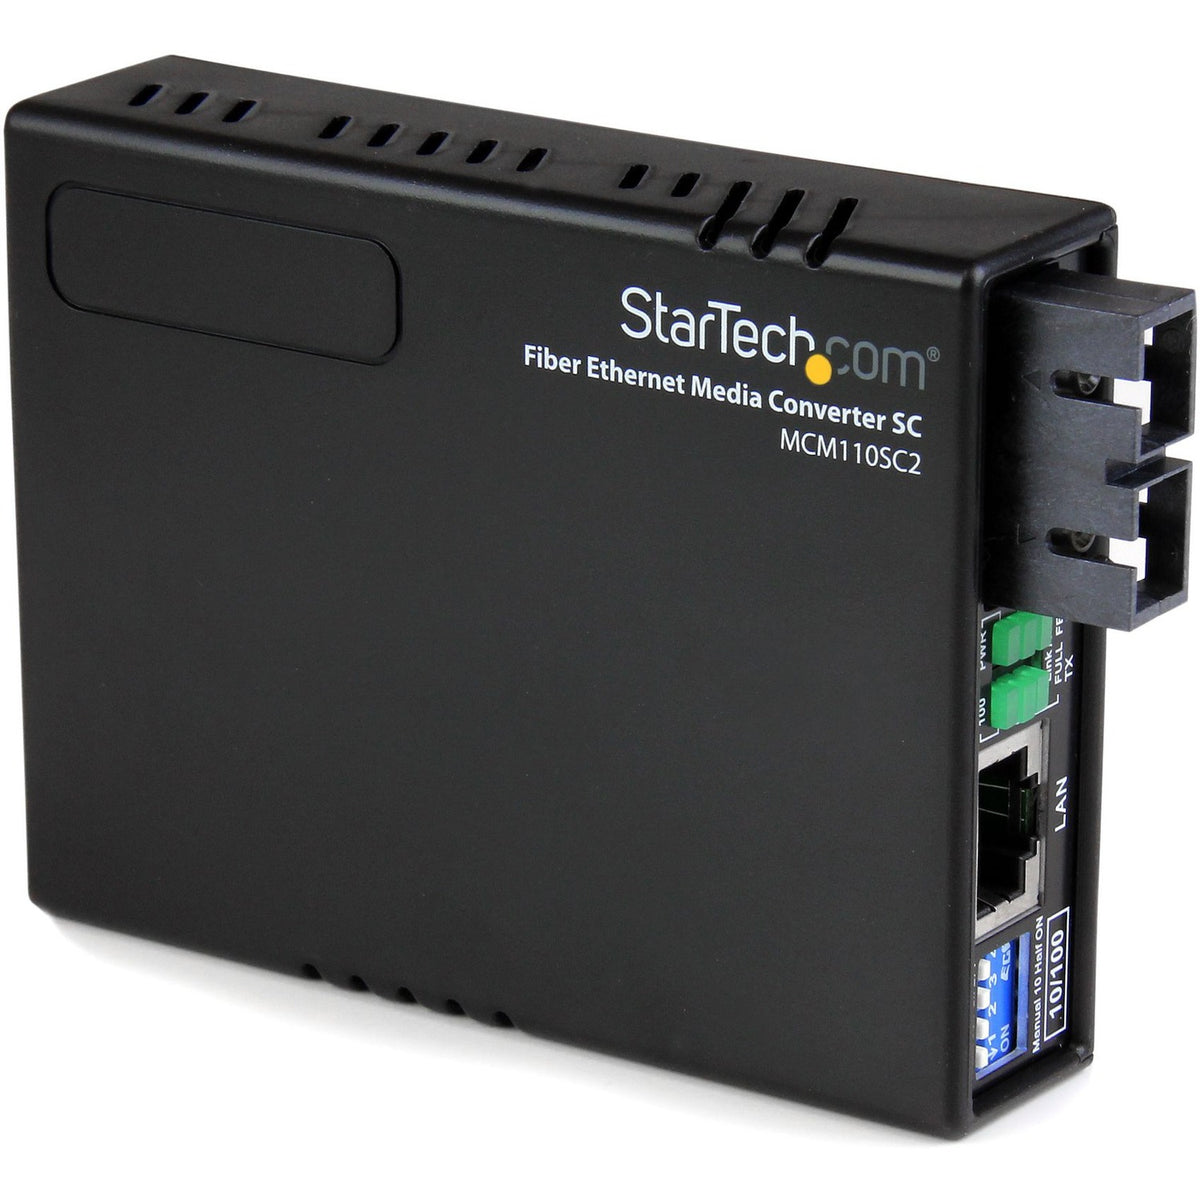 StarTech.com 10/100 Fiber to Ethernet Media Converter Multi Mode SC 2 km - MCM110SC2